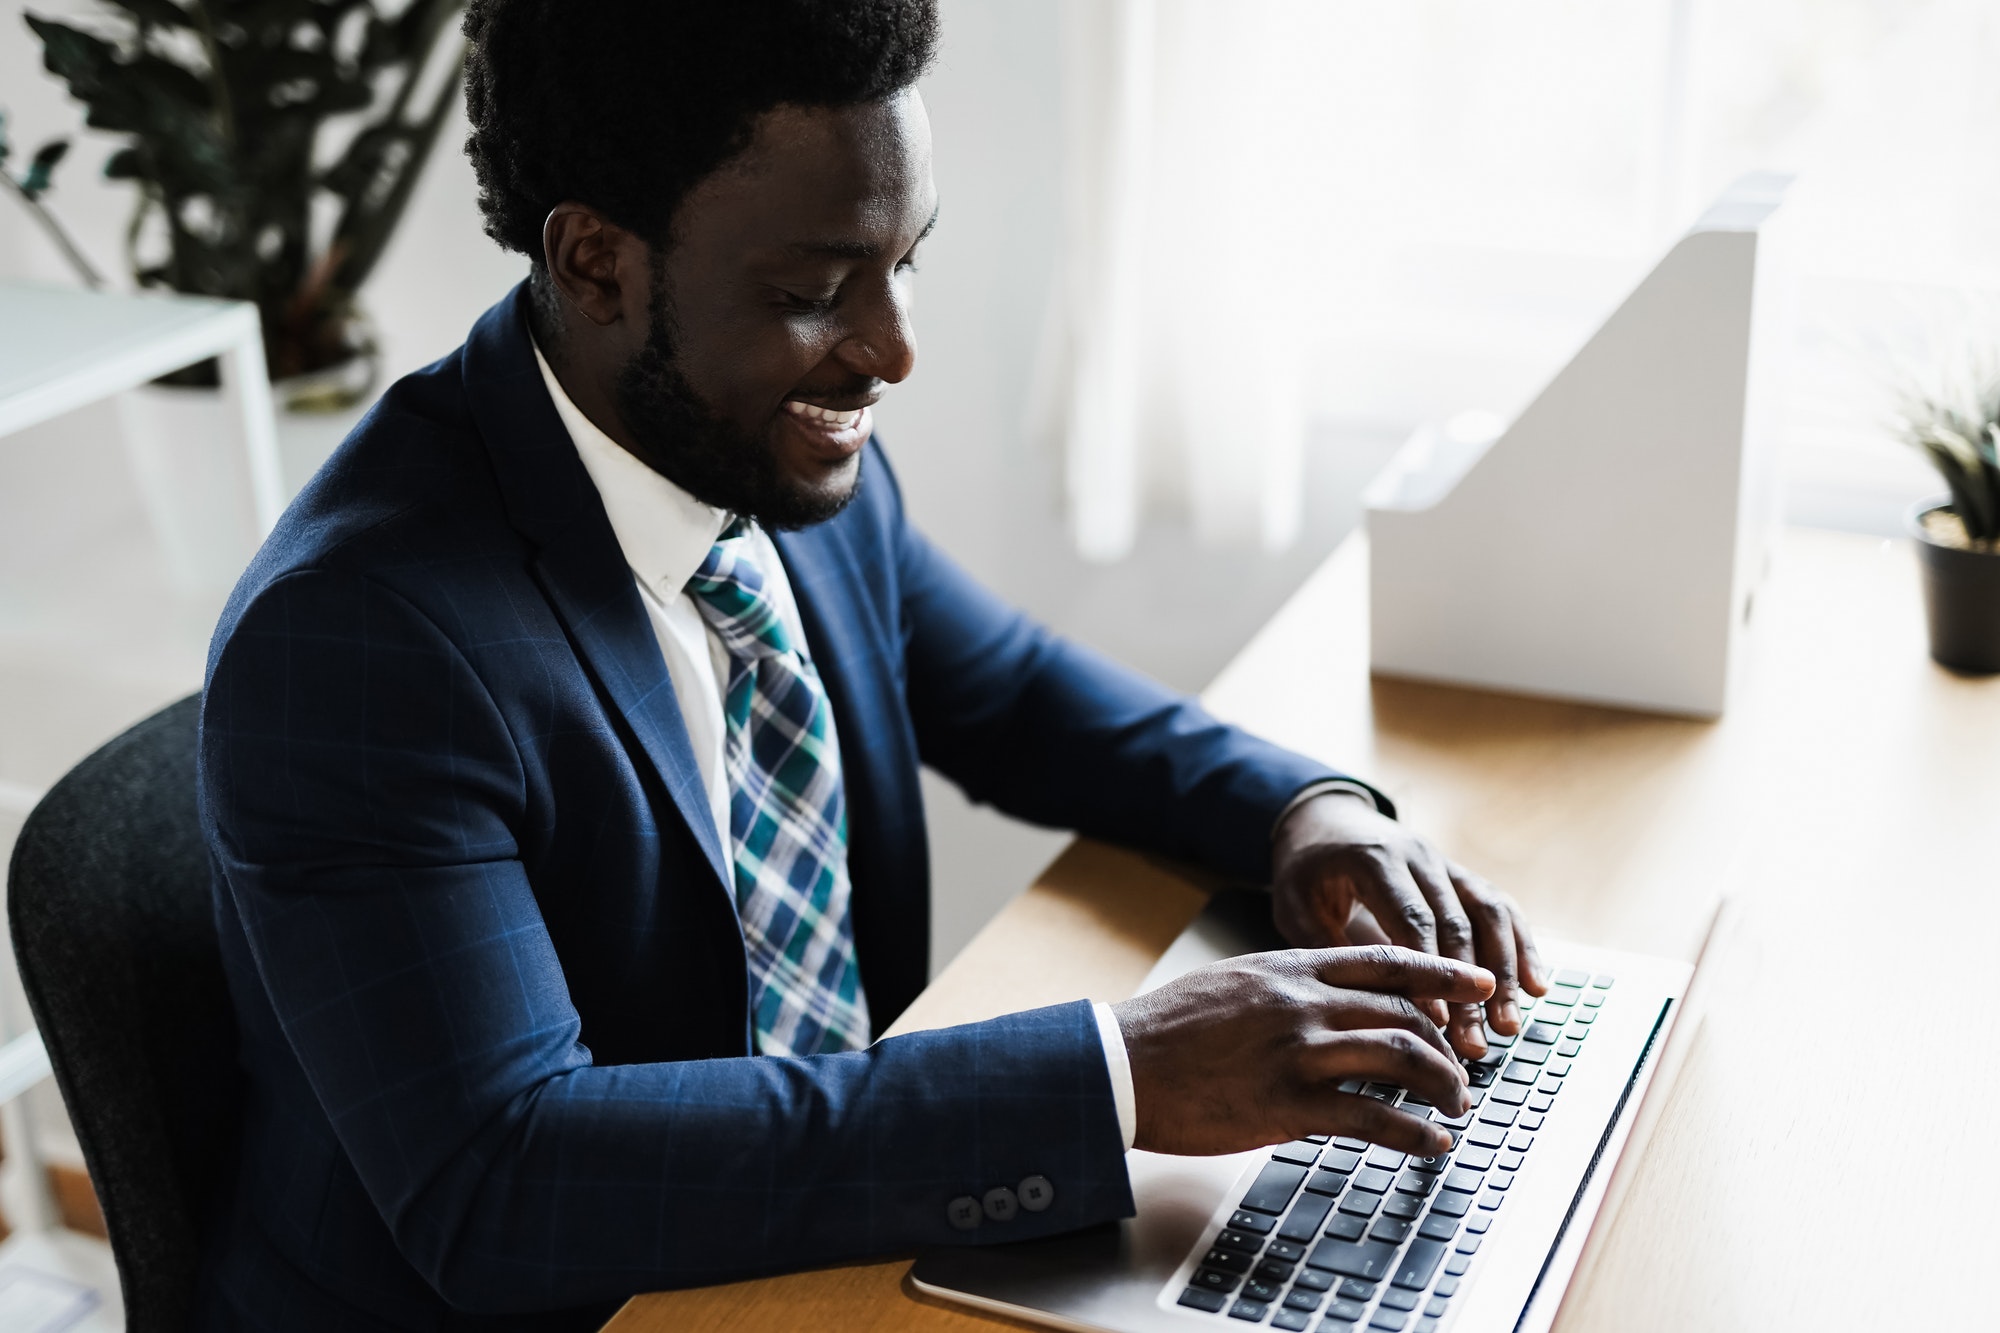 Business african man working inside modern office using computer laptop - Focus on face